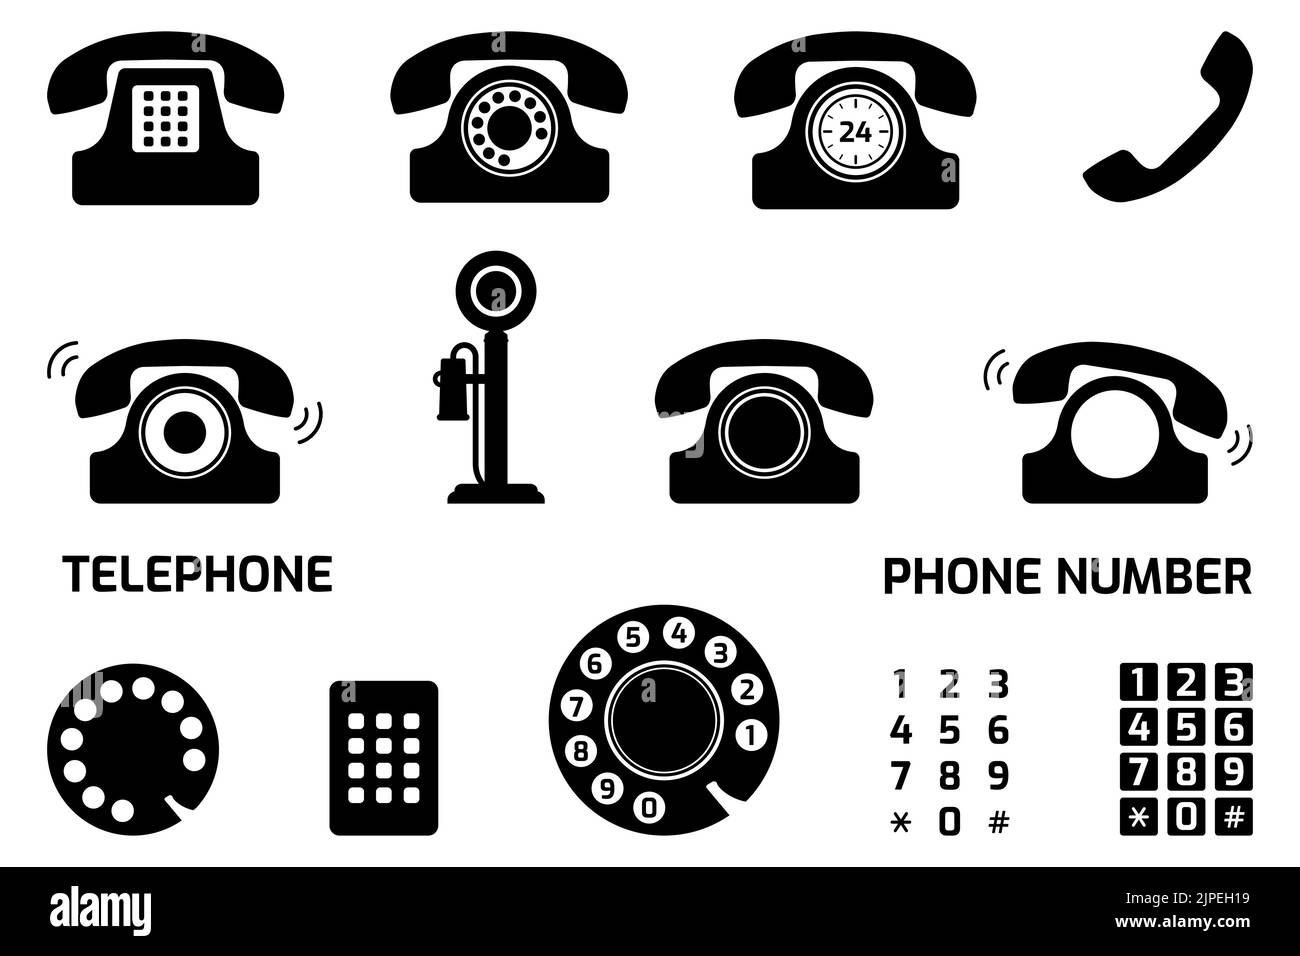 Retro telephone icon set. Collection of vintage telephone symbols. Flat vector illustration Stock Vector